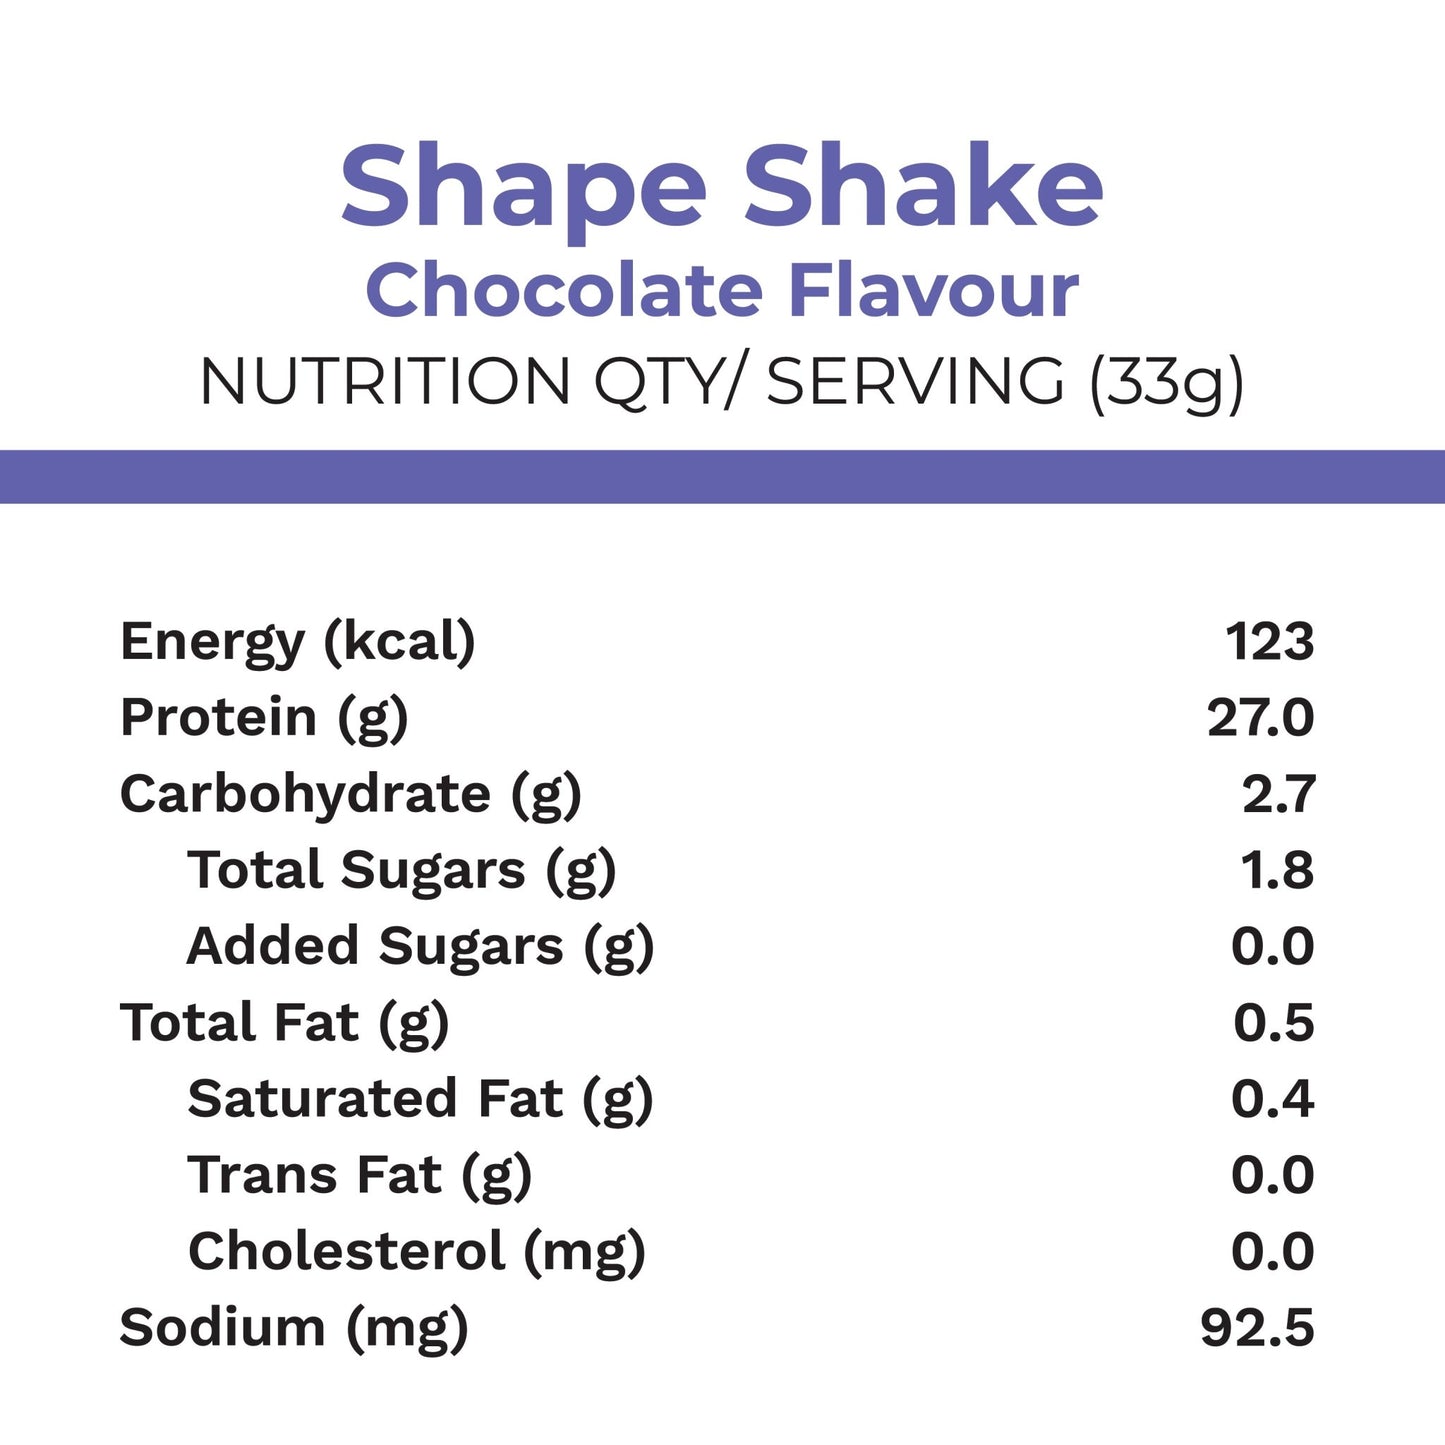 Foodstrong Mini Shaker [300 ml] – foodstrong